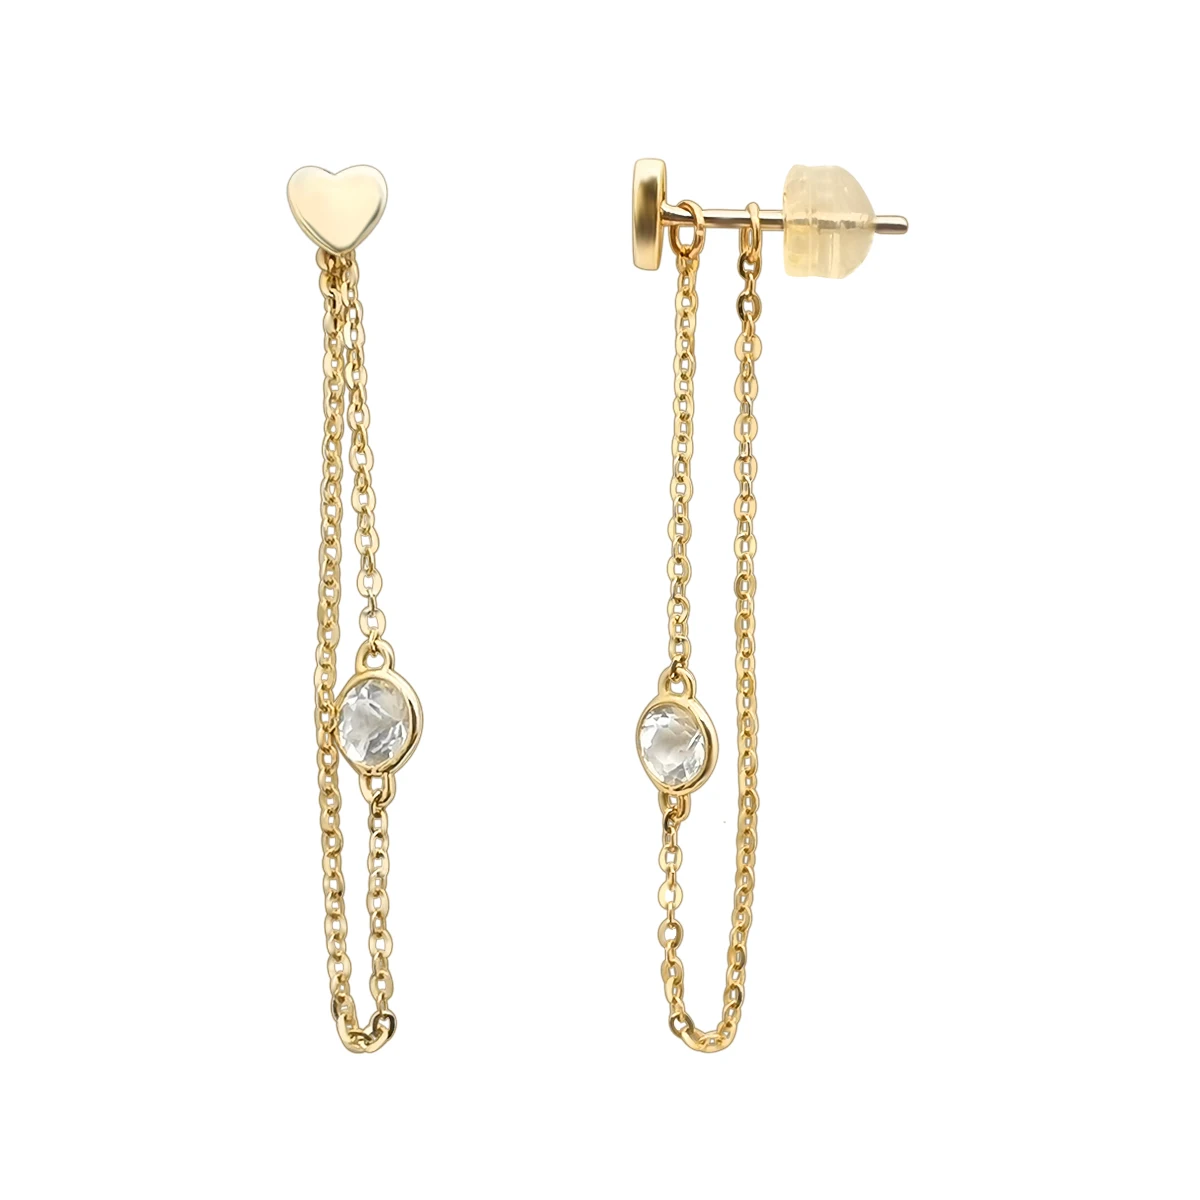 

Newest Design 14K Solid Gold Fashion Chain Link Stud Earrings Heart Shape Real Gold 14 Karat Gold Earring Women Jewelry